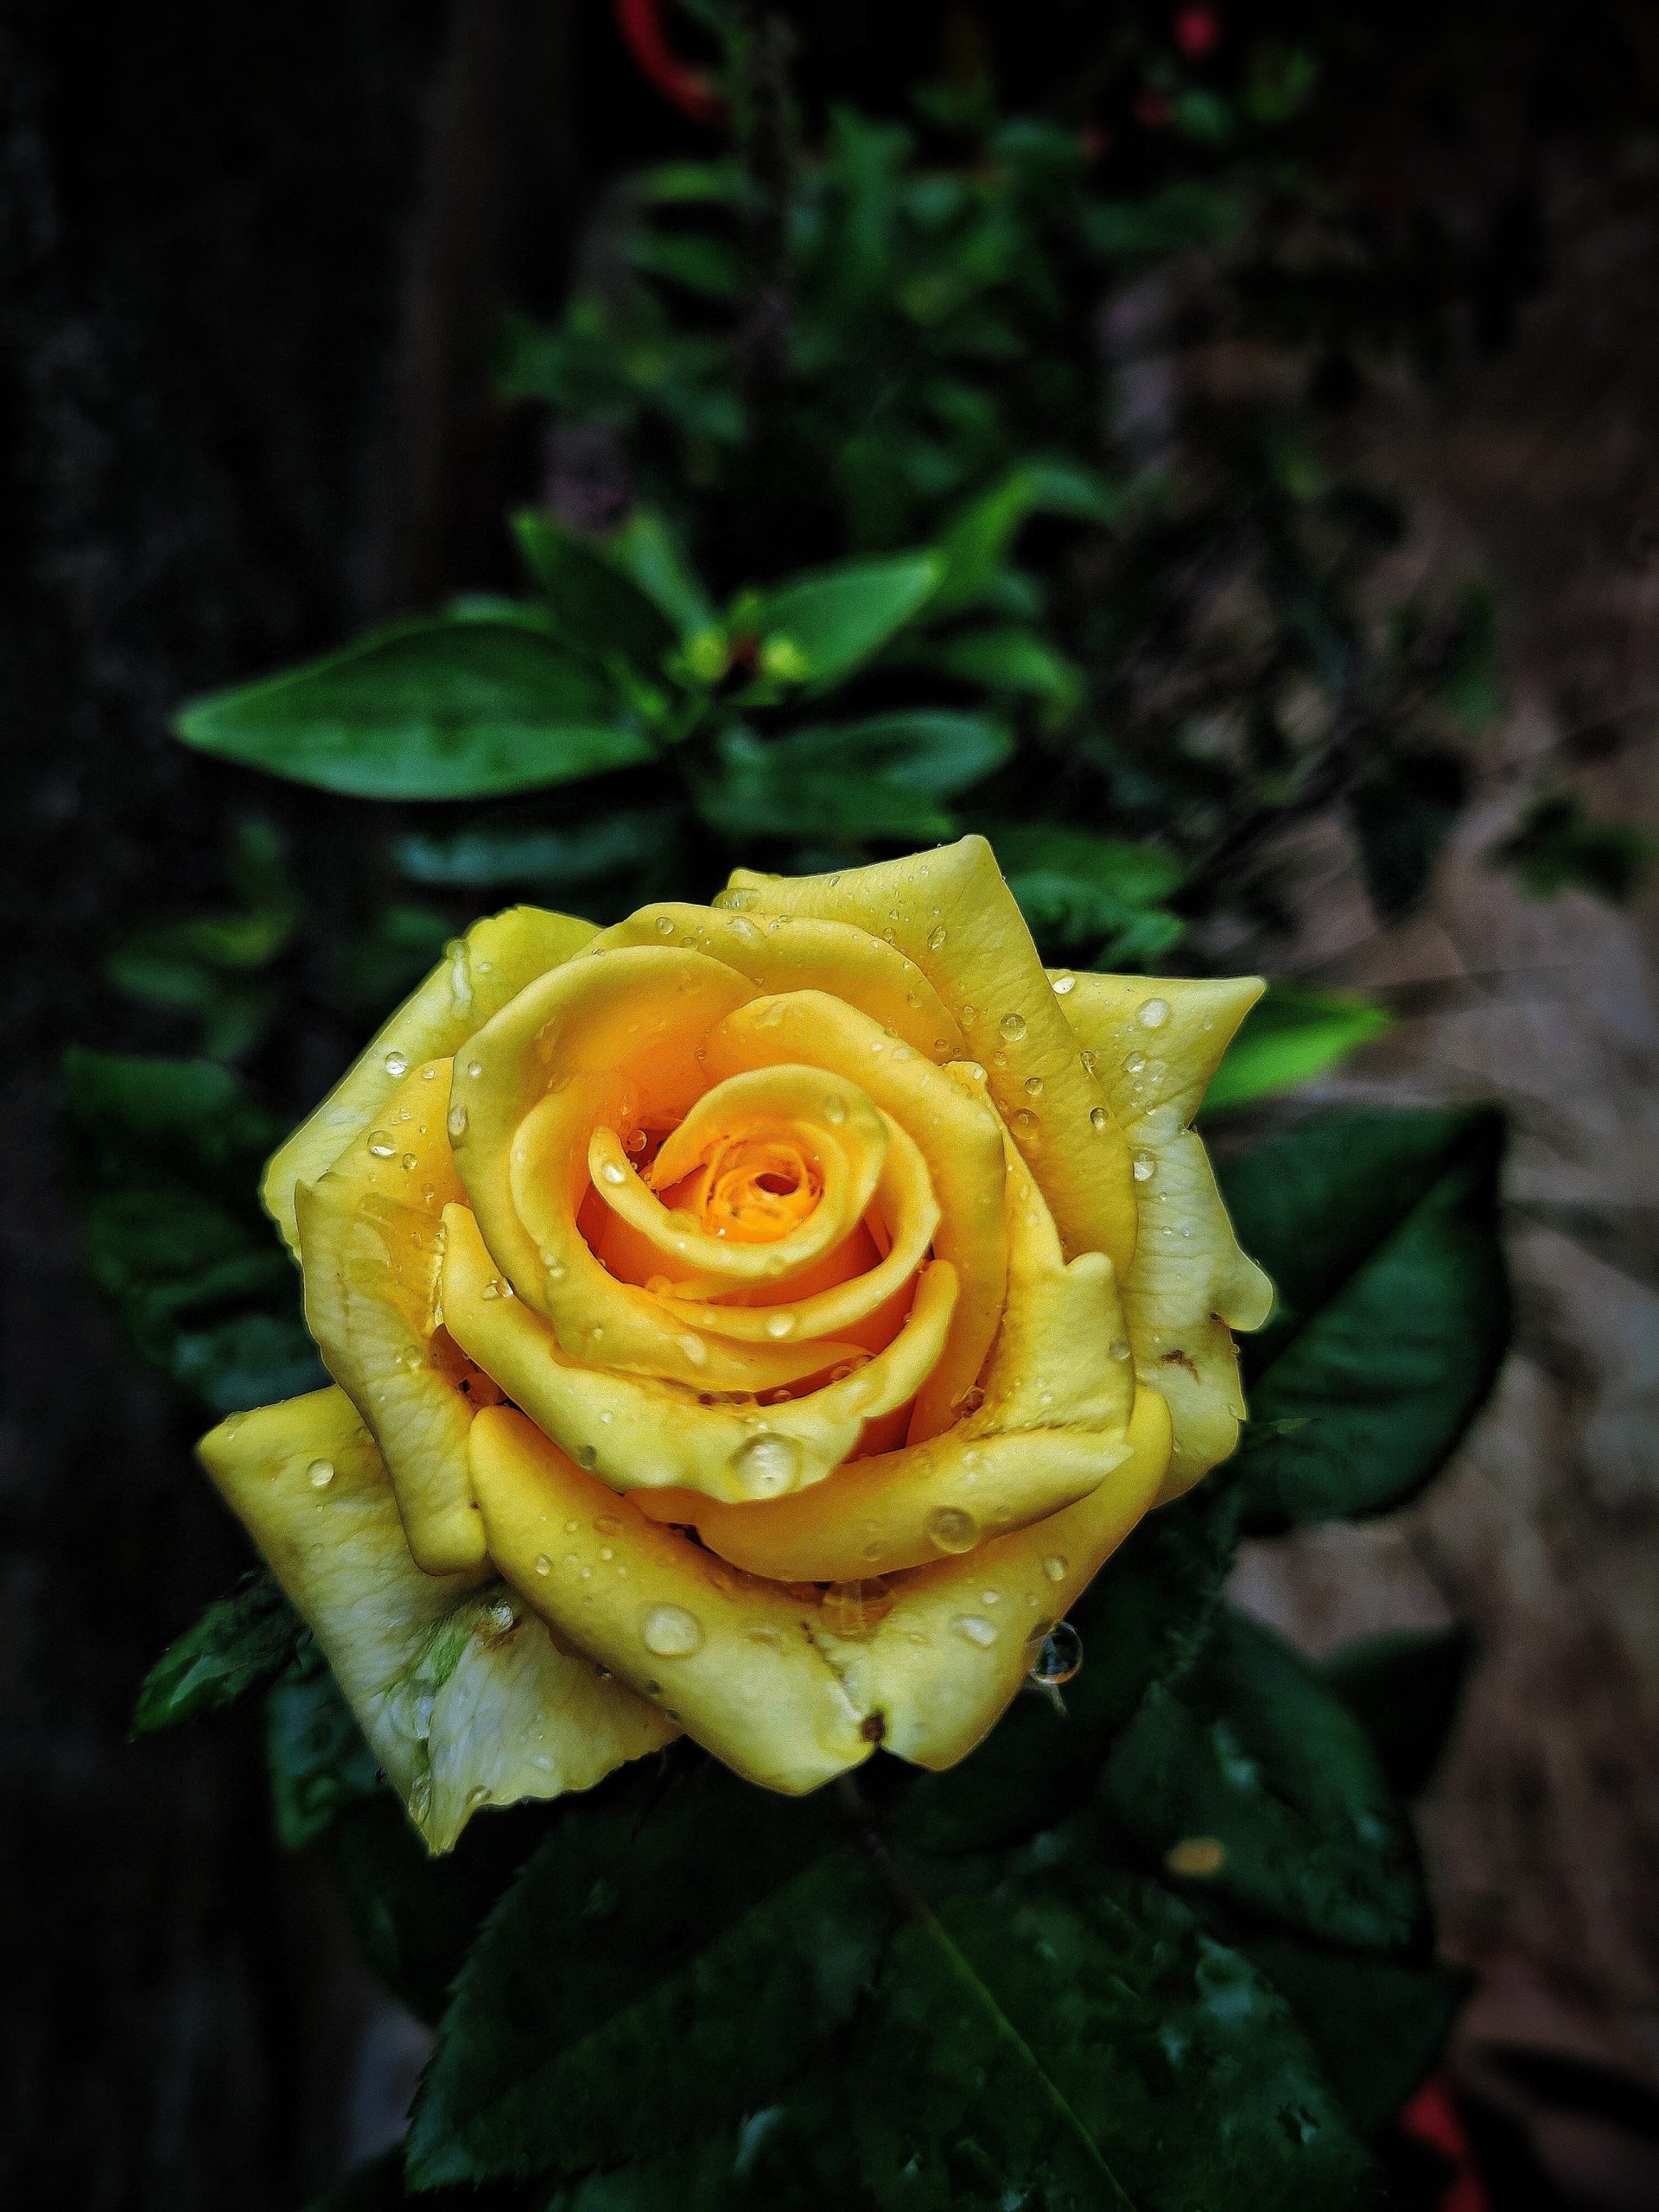 rain drops on a rose